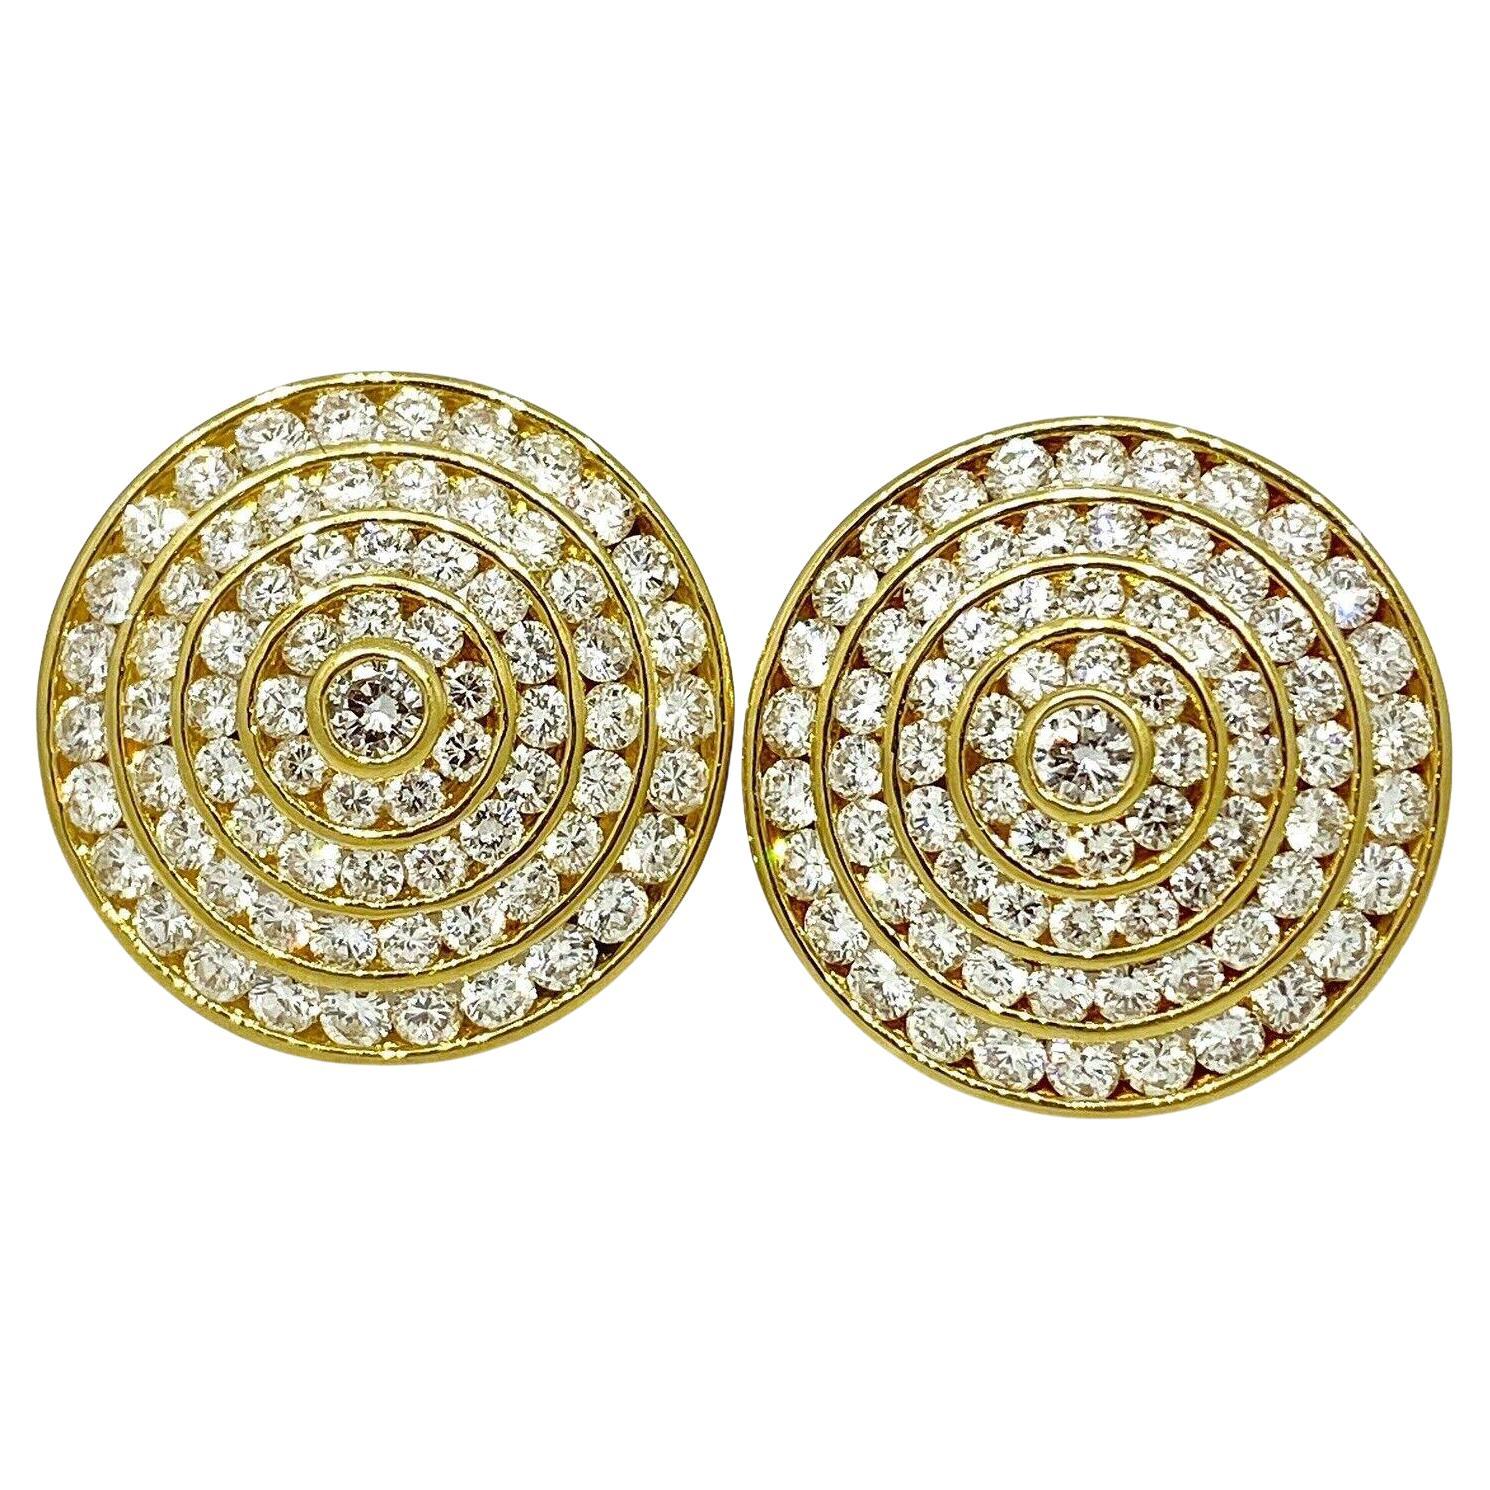 4 Row Circle Diamond Earrings 3.95 carat total weight in 18k Yellow Gold